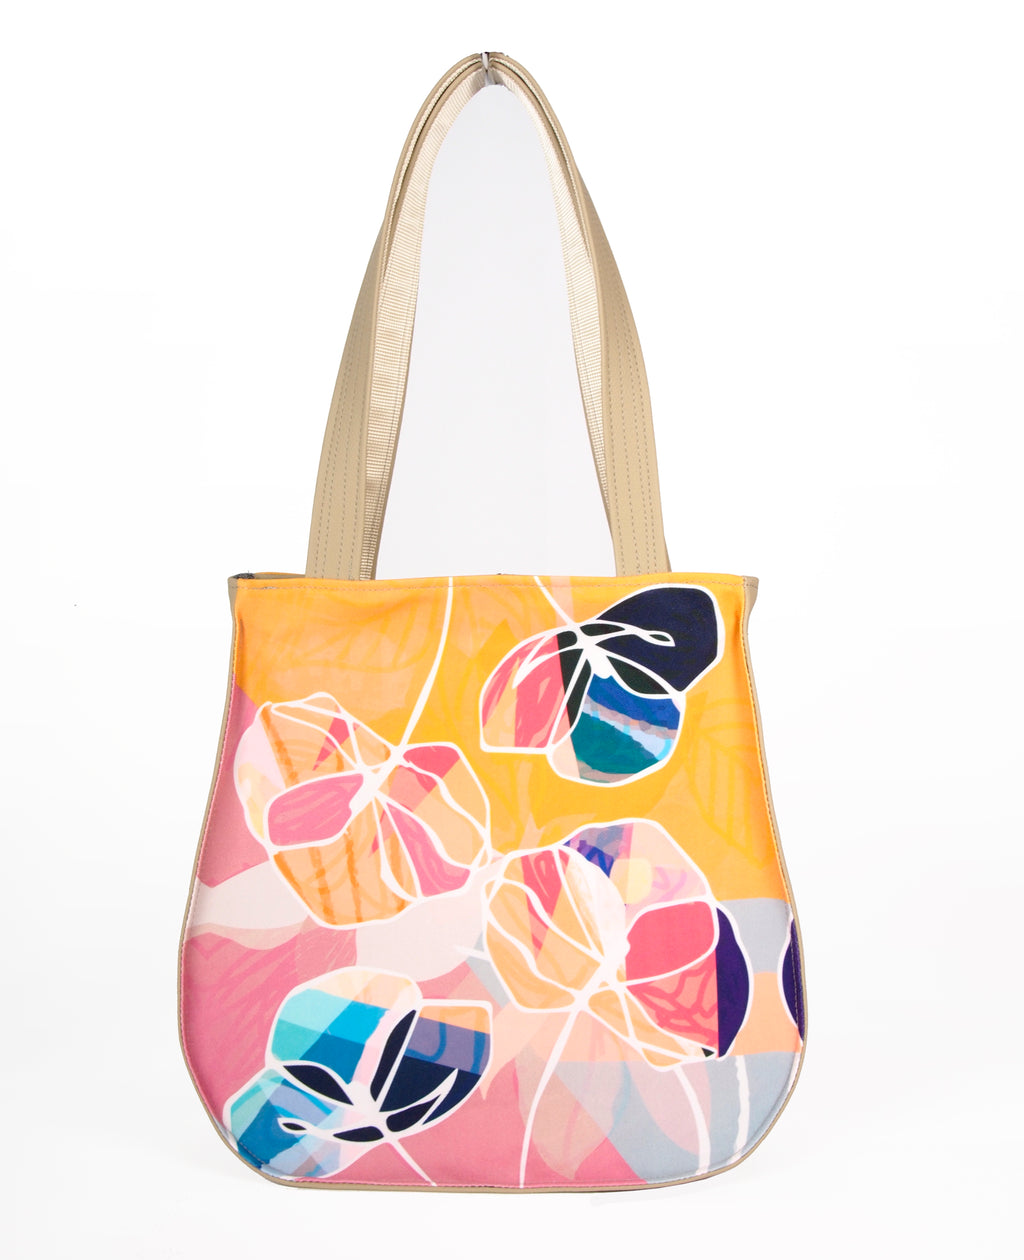 Bardo style bag - Colorful fantasy - Premium style bag from BARDO ART WORKS - Just lvabstract, black, blue, floral, handemade, nocturne, pink, summer69.00! Shop now at BARDO ART WORKS